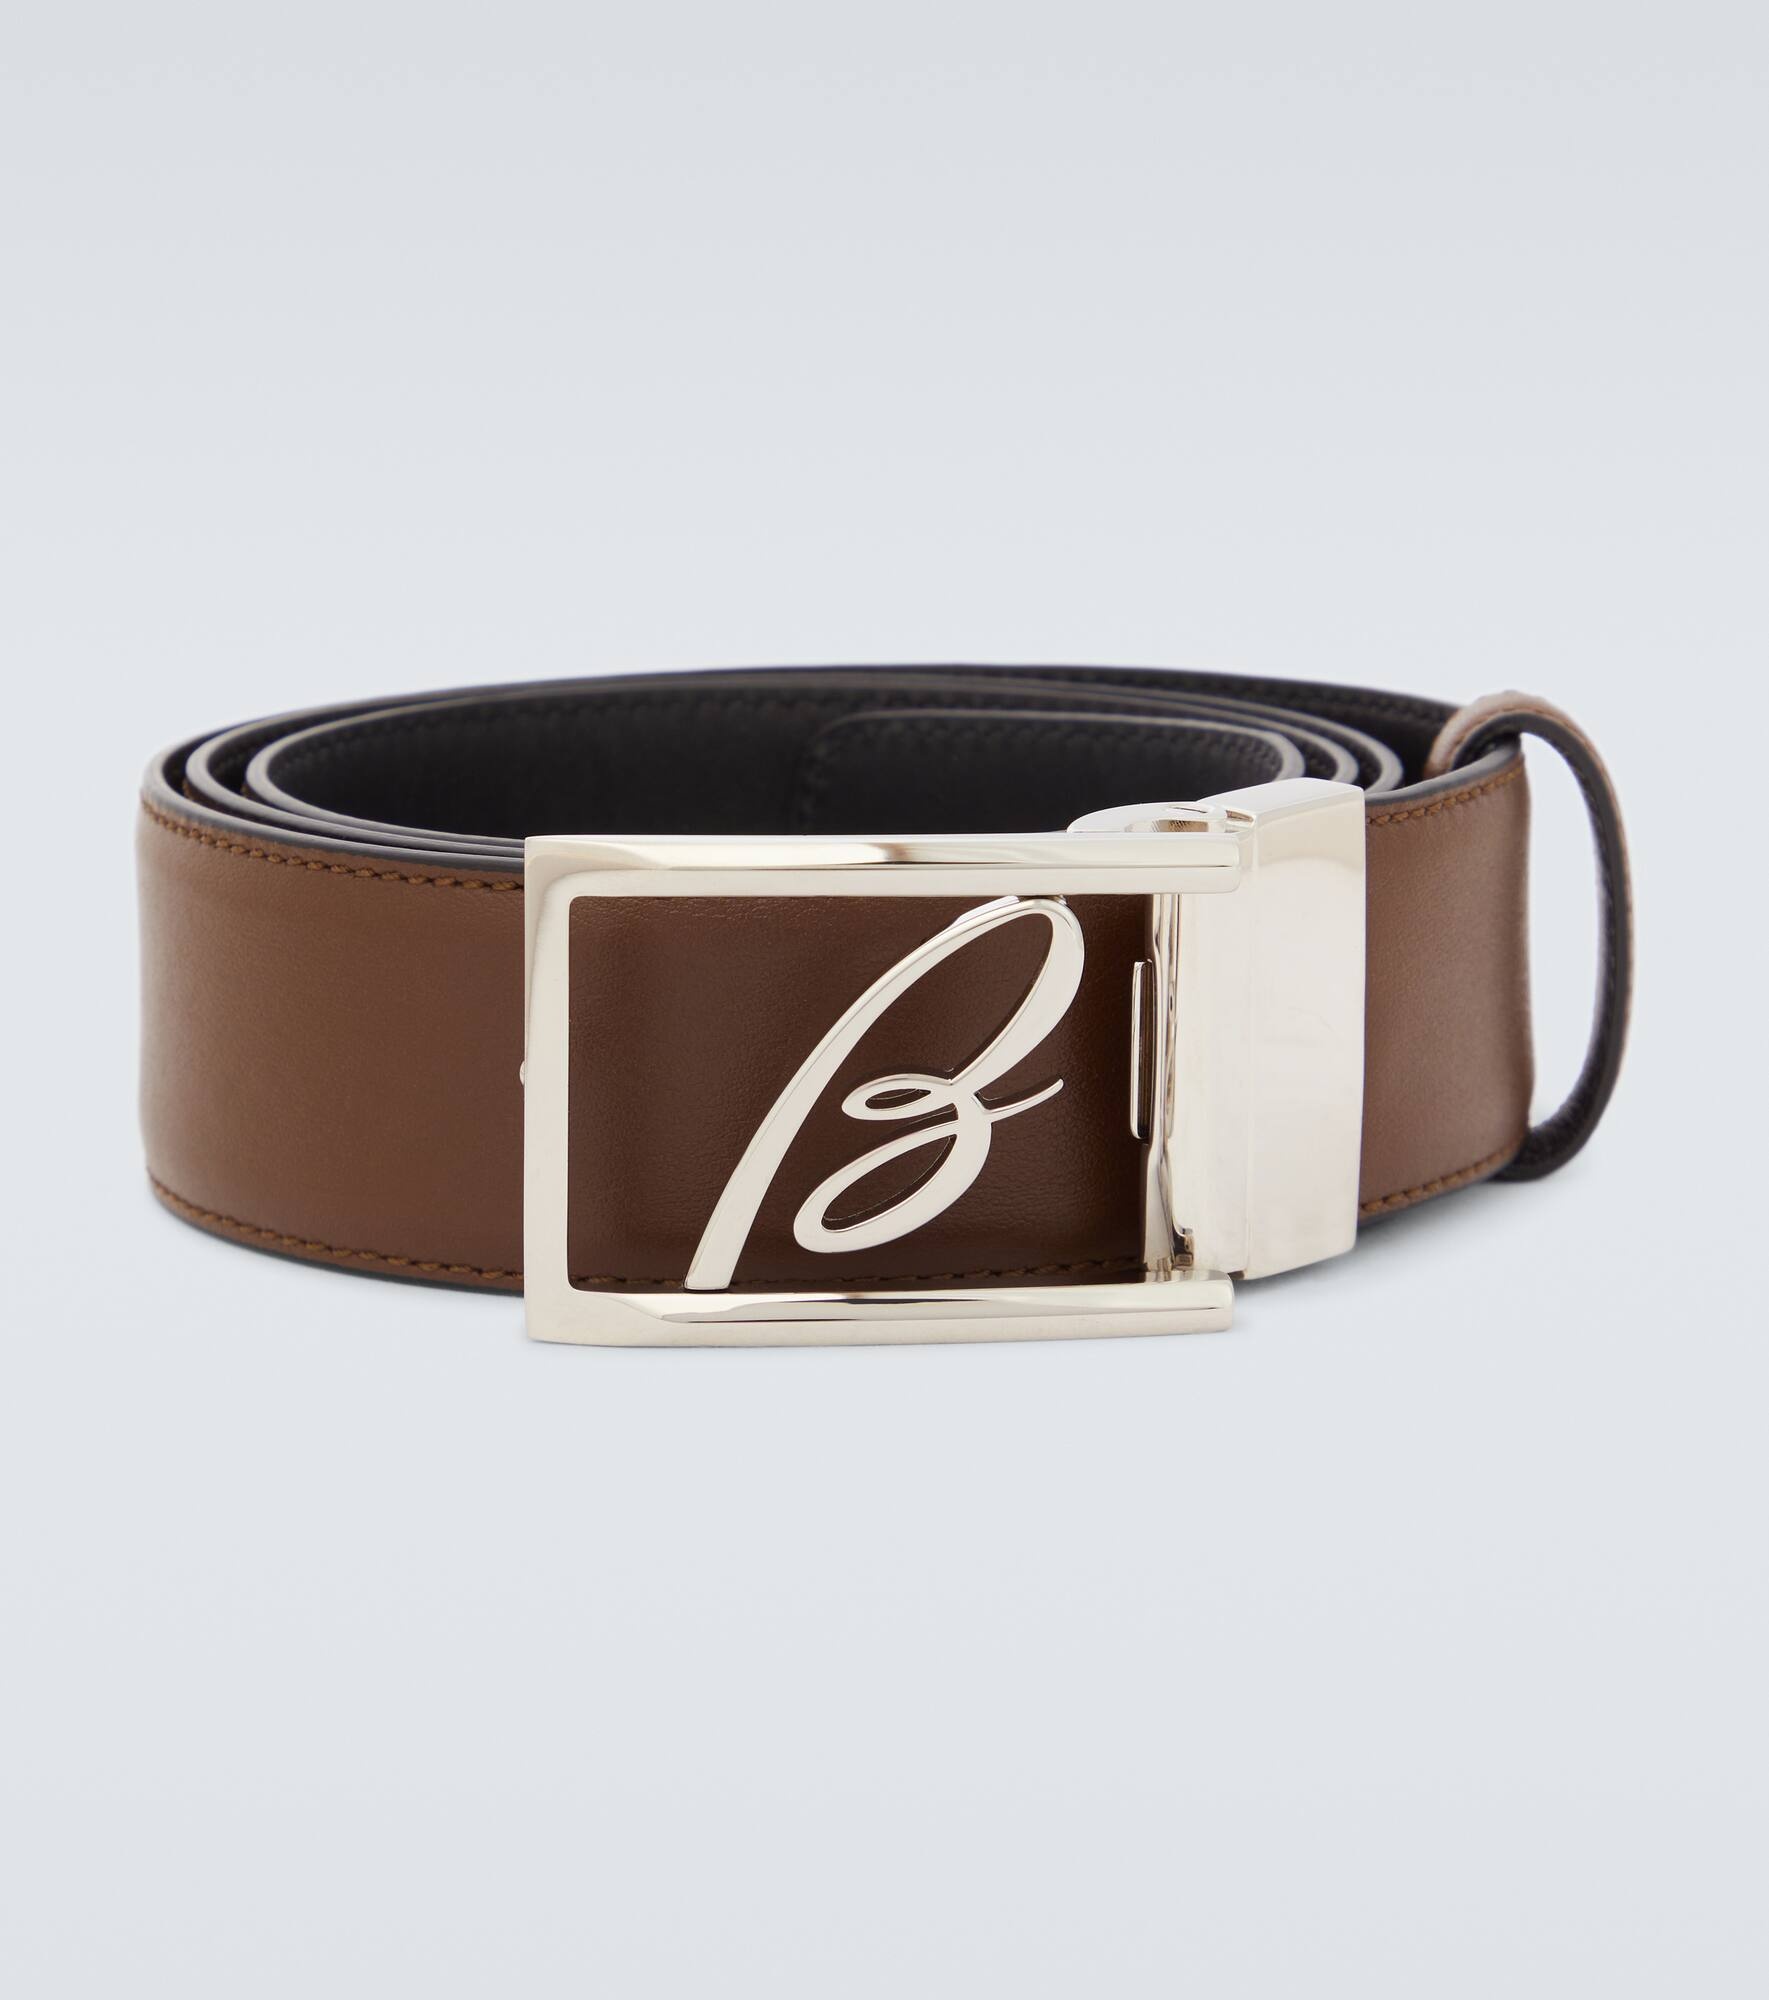 Leather belt - 1